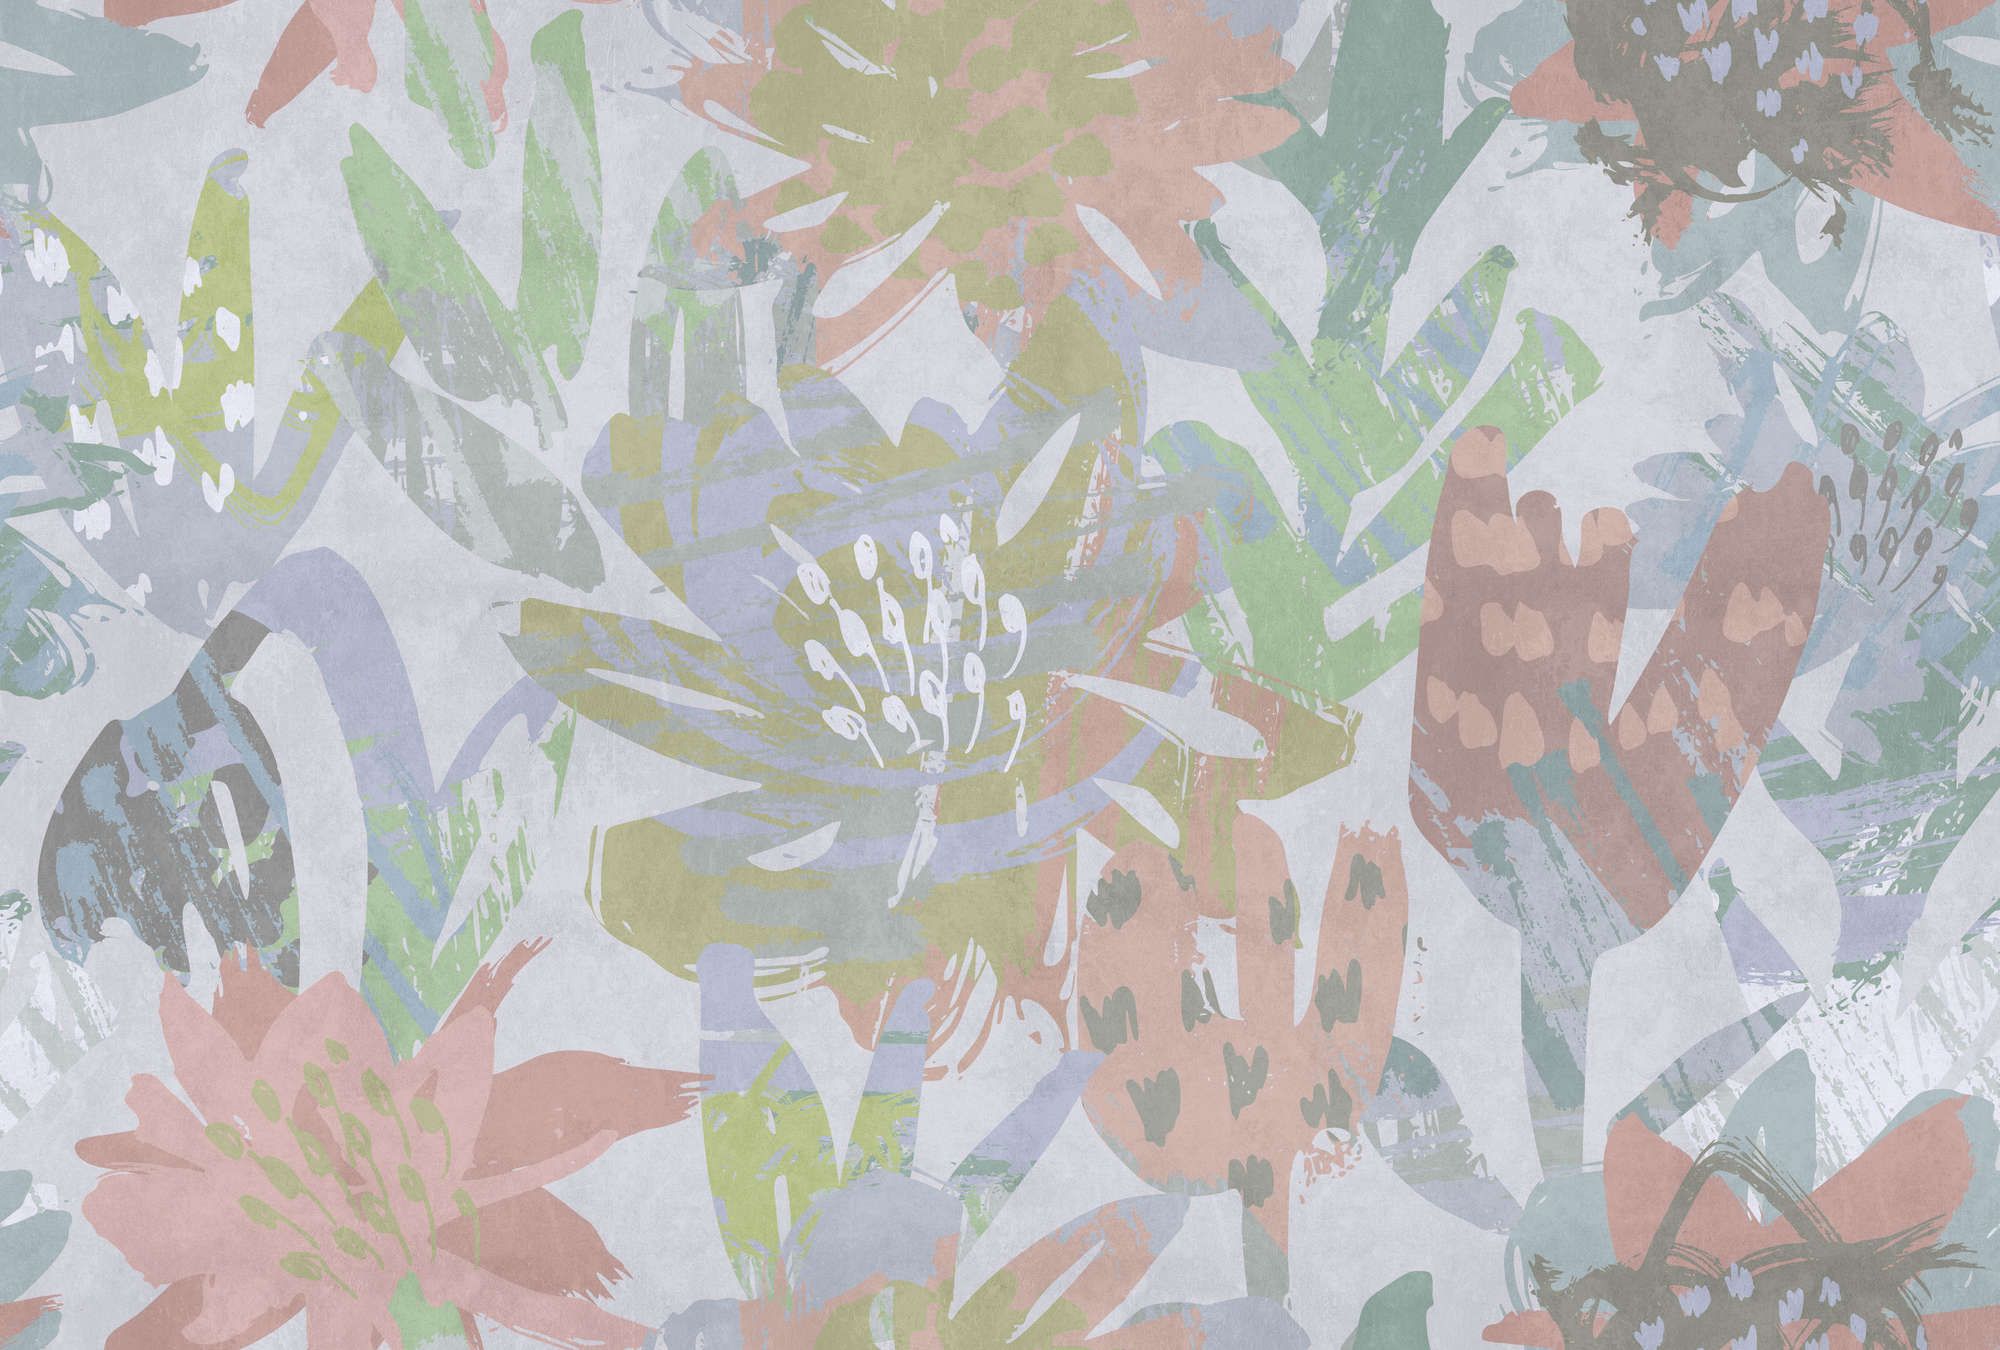             Fotomural »sophia« - Motivo floral colorido sobre textura de yeso de hormigón - Tela no tejida mate, lisa
        